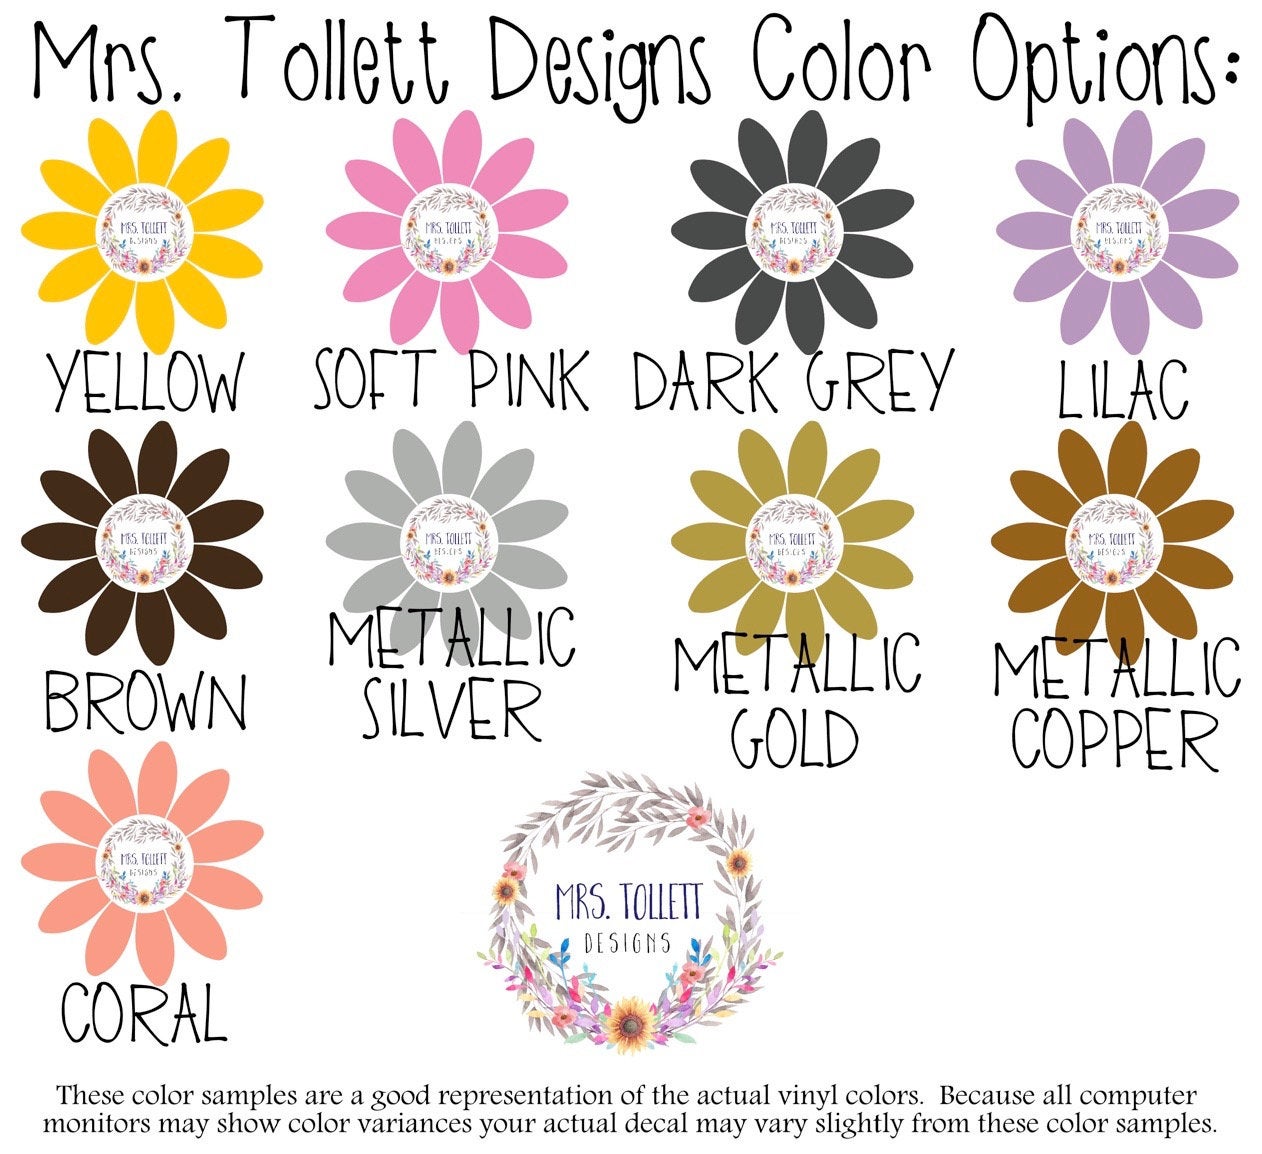 Mrs Tollett Designs Vinyl Color Chart 2, Yellow, Soft Pink, Dark Grey, Gray, Lilac, Brown, Metallic Silver, Metallic Gold, Metallic Copper, Coral